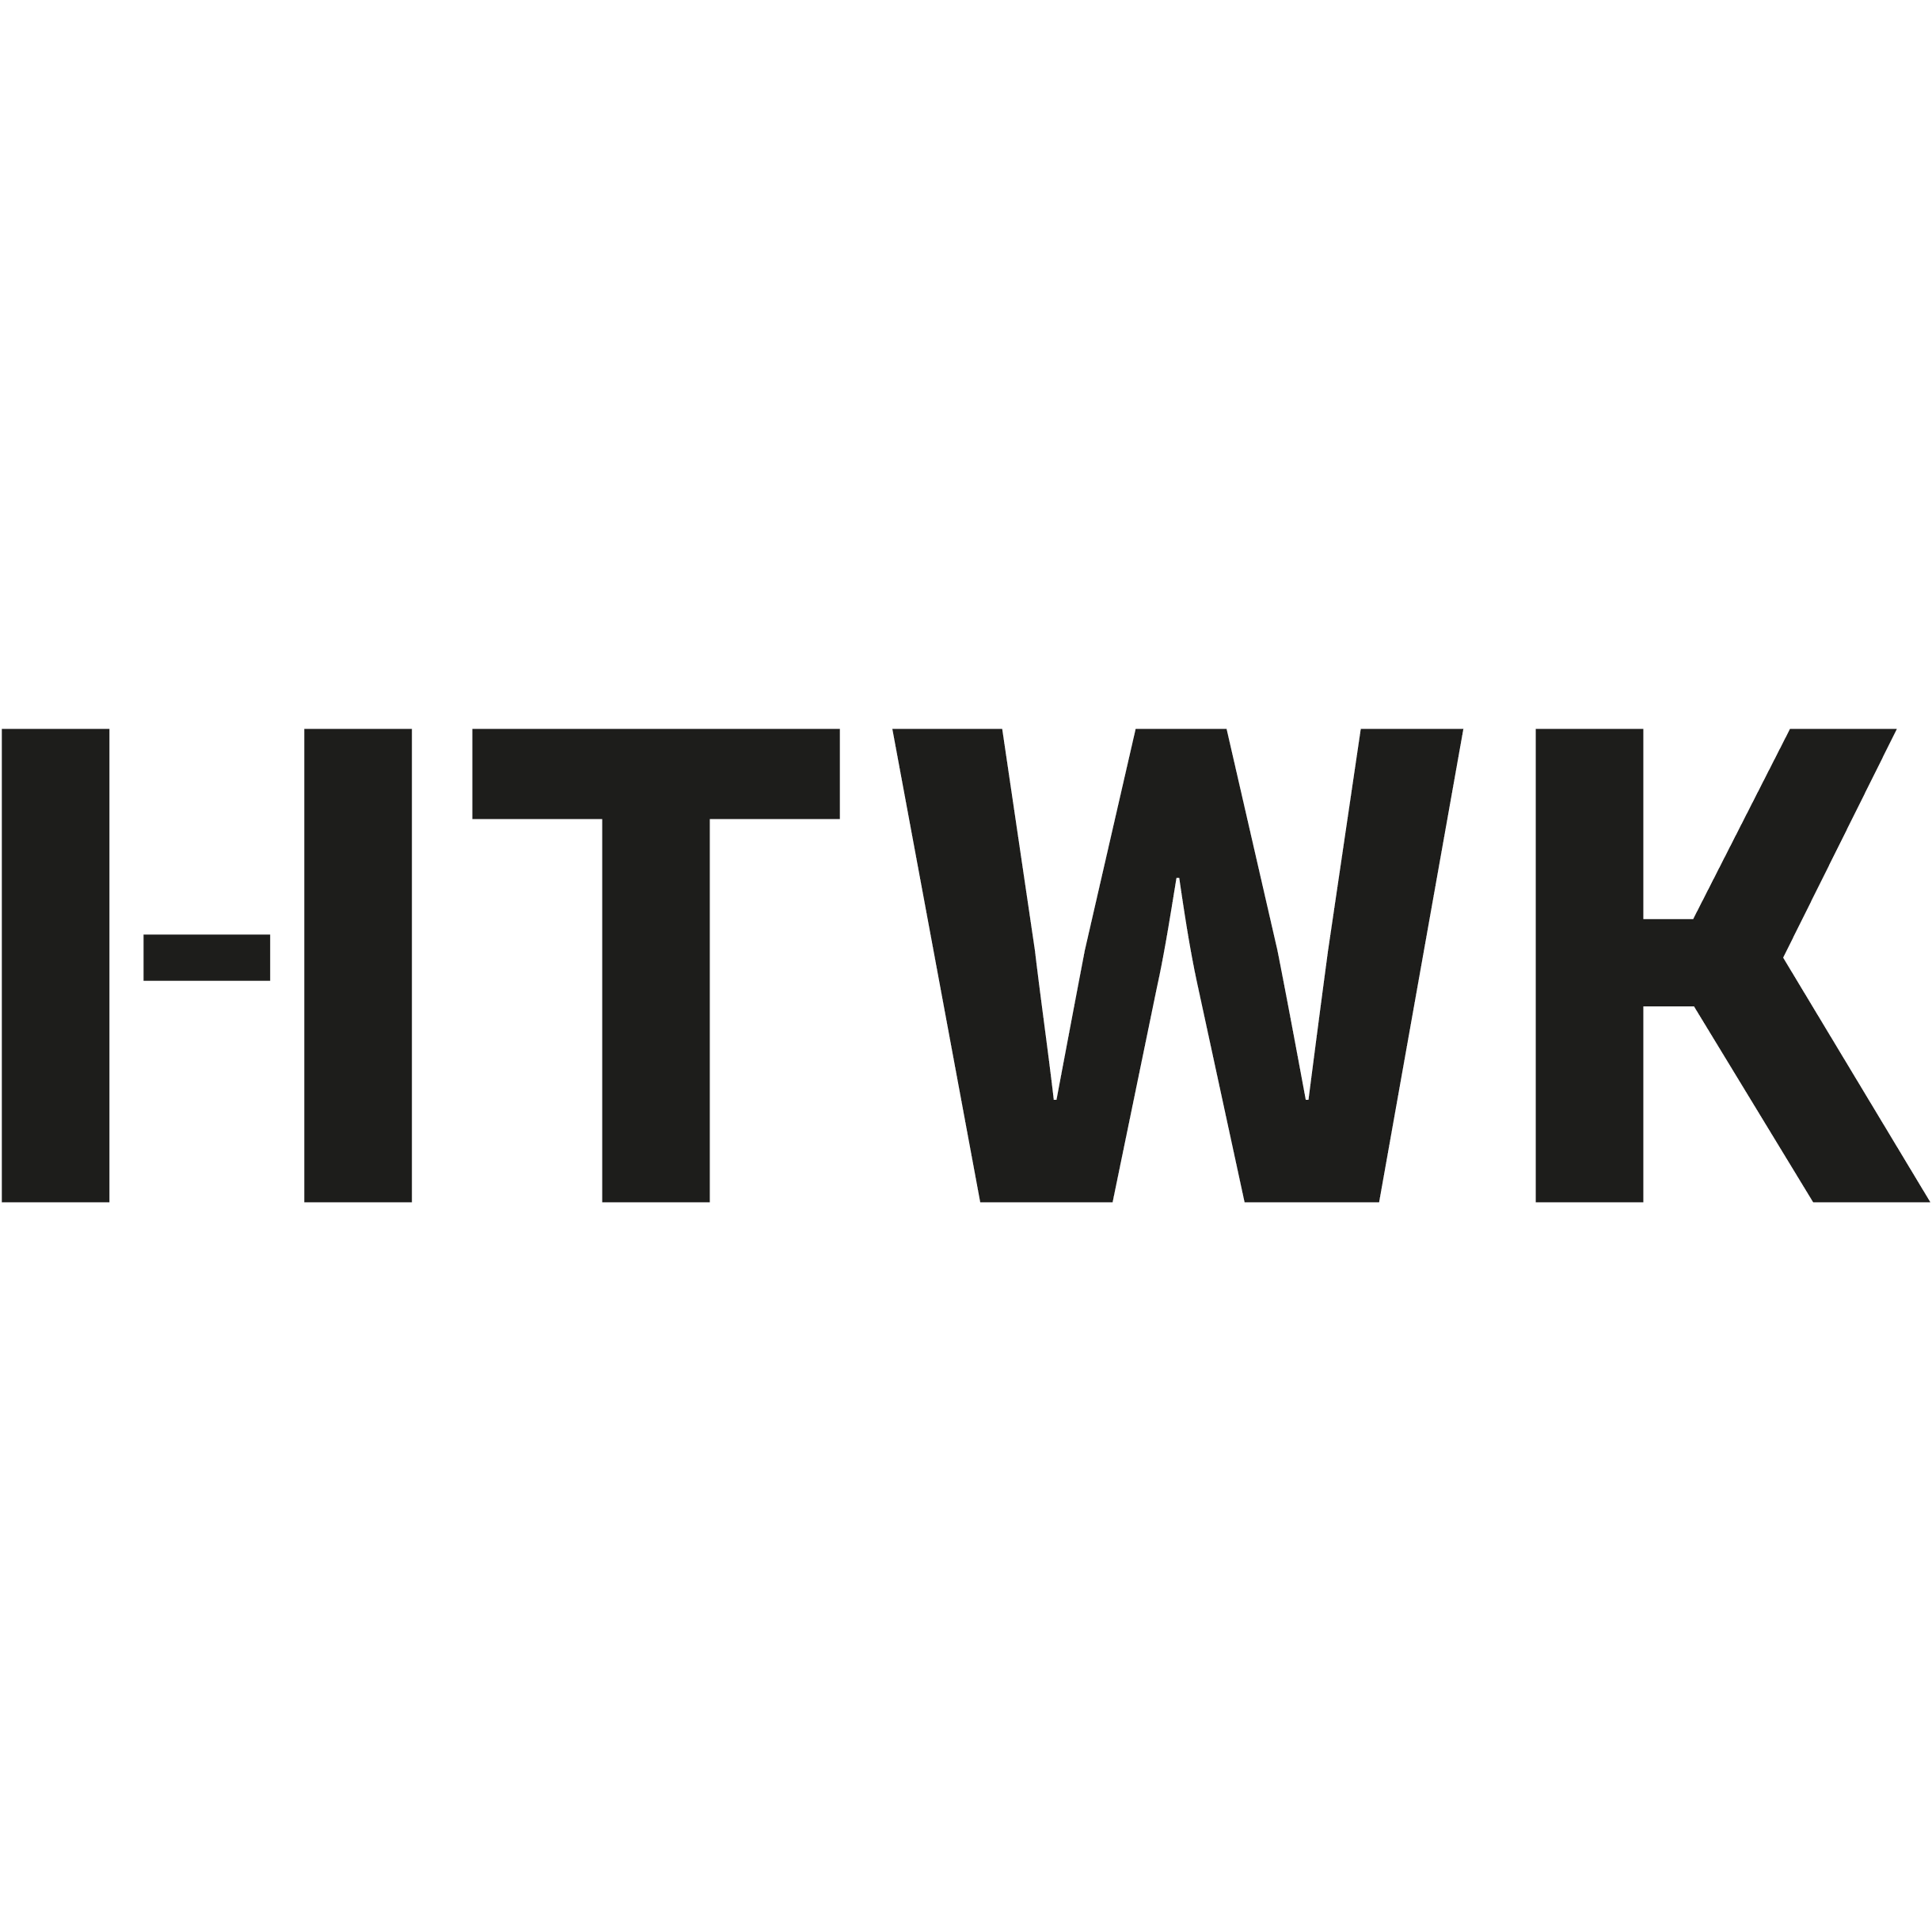 HTWK Leipzig Logo